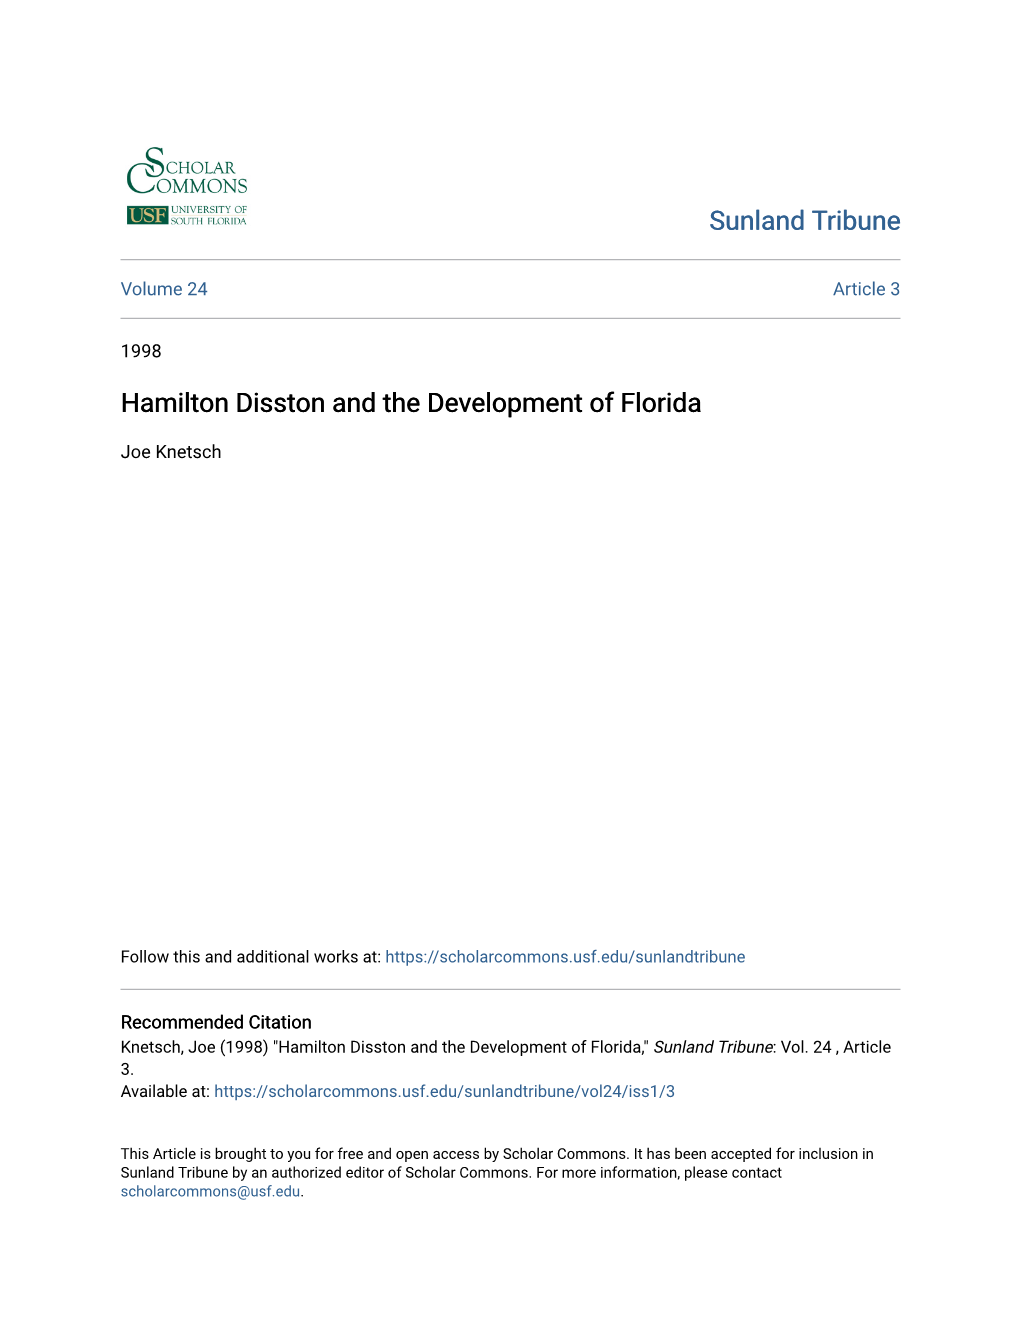 Hamilton Disston and the Development of Florida